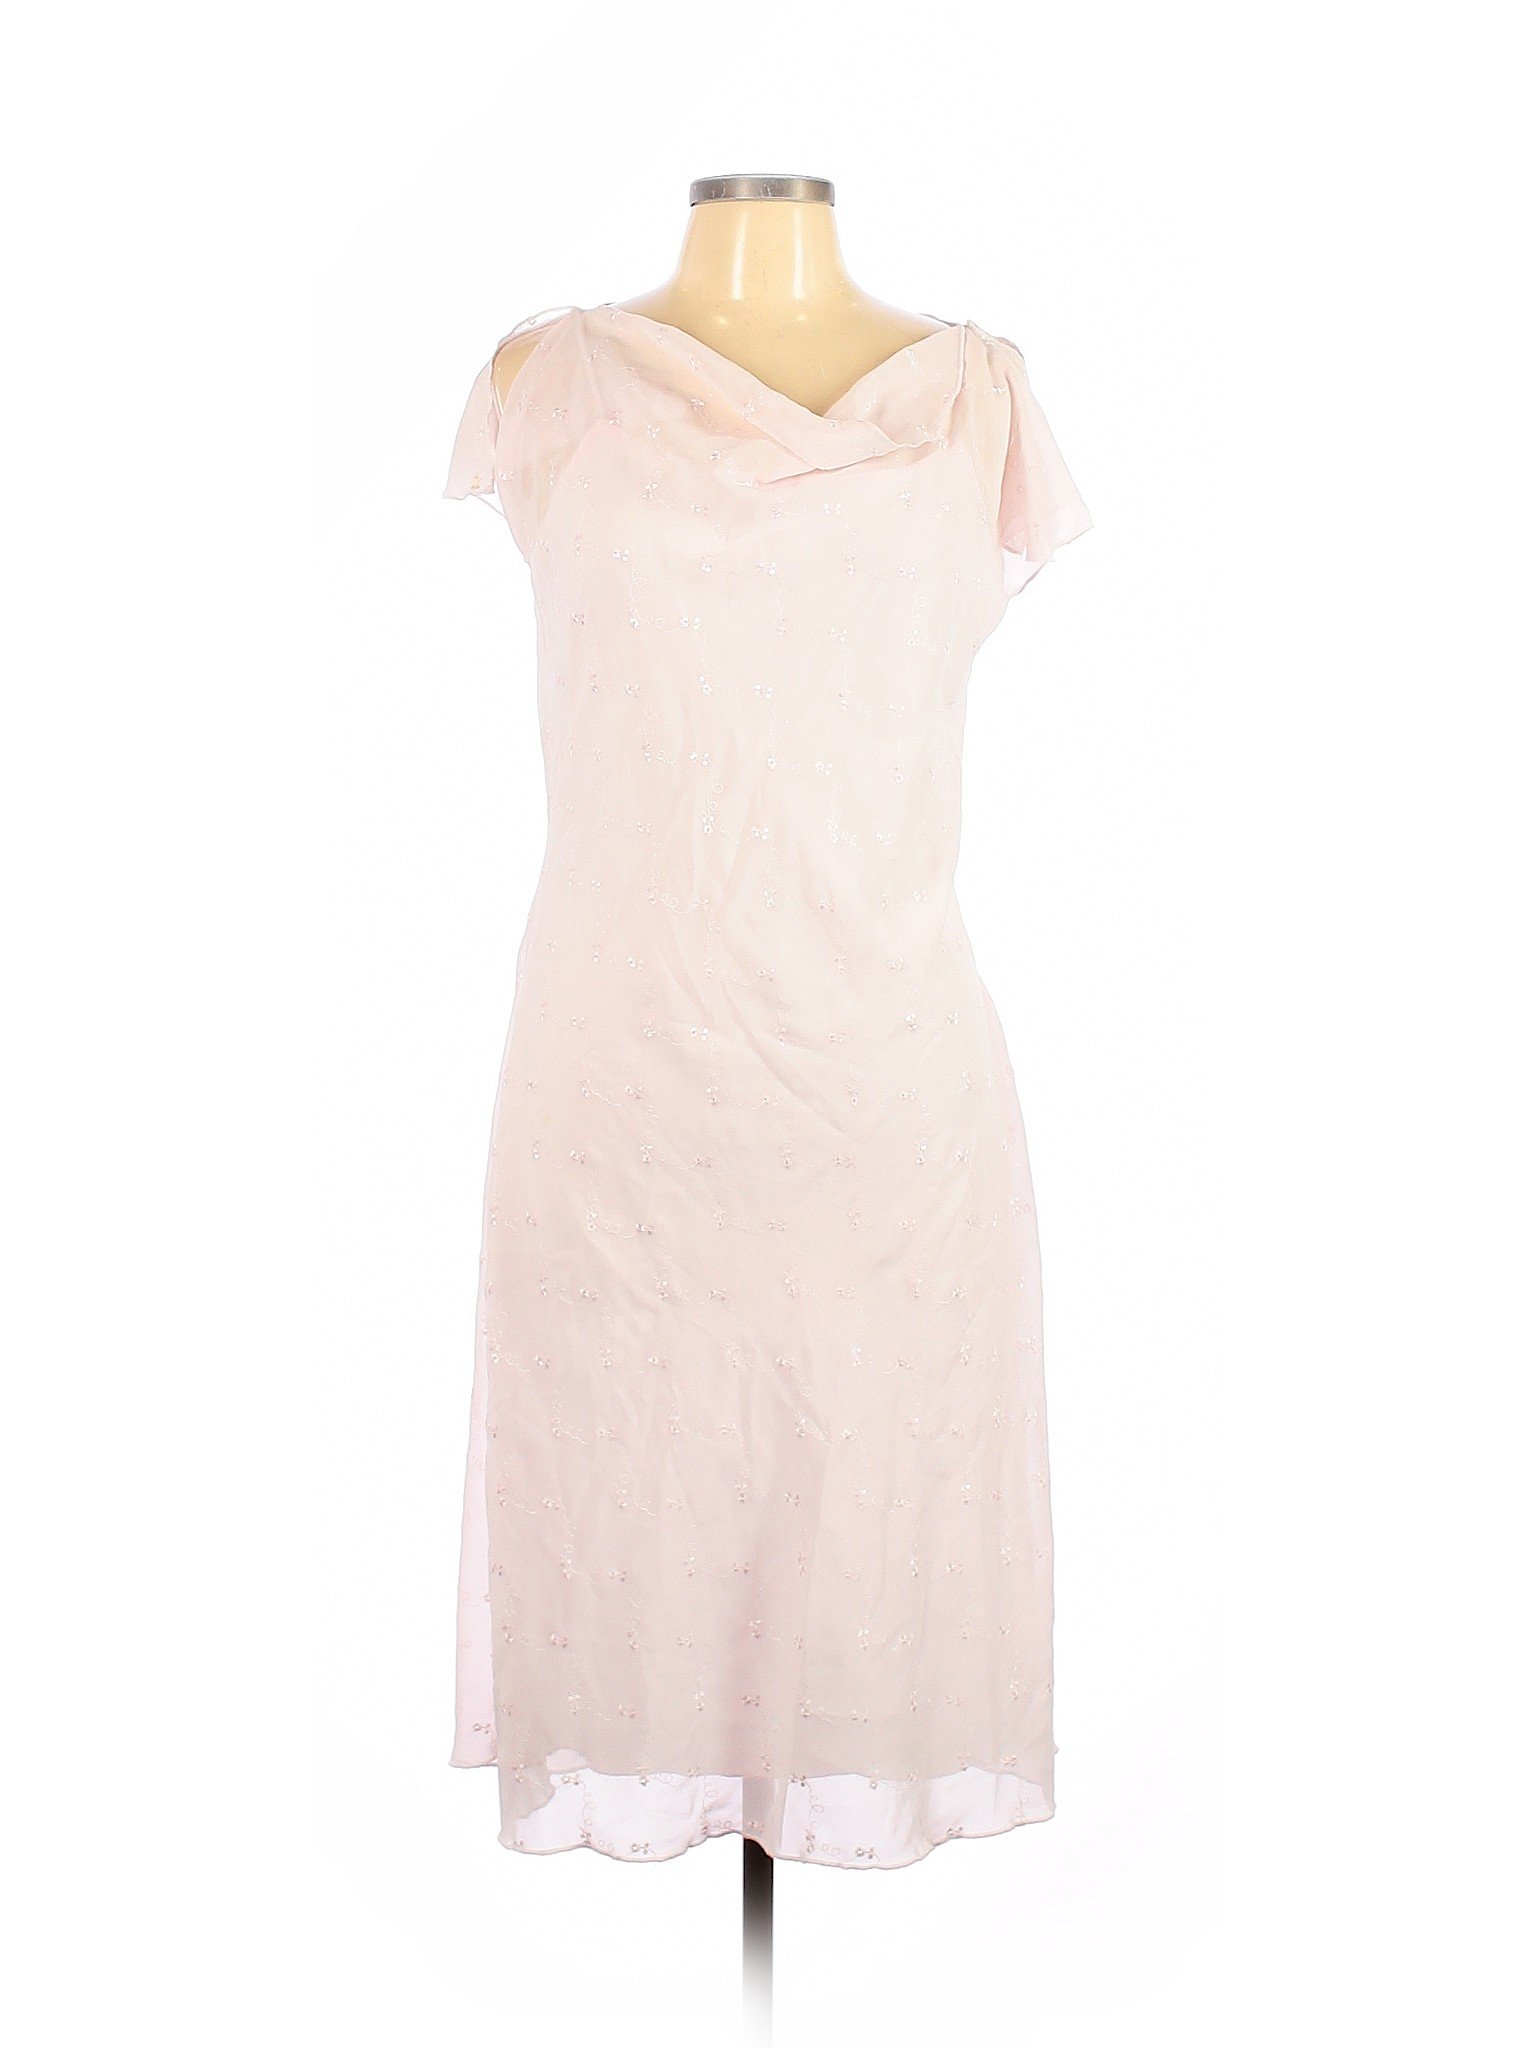 B. Darlin Women Pink Cocktail Dress 13 | eBay